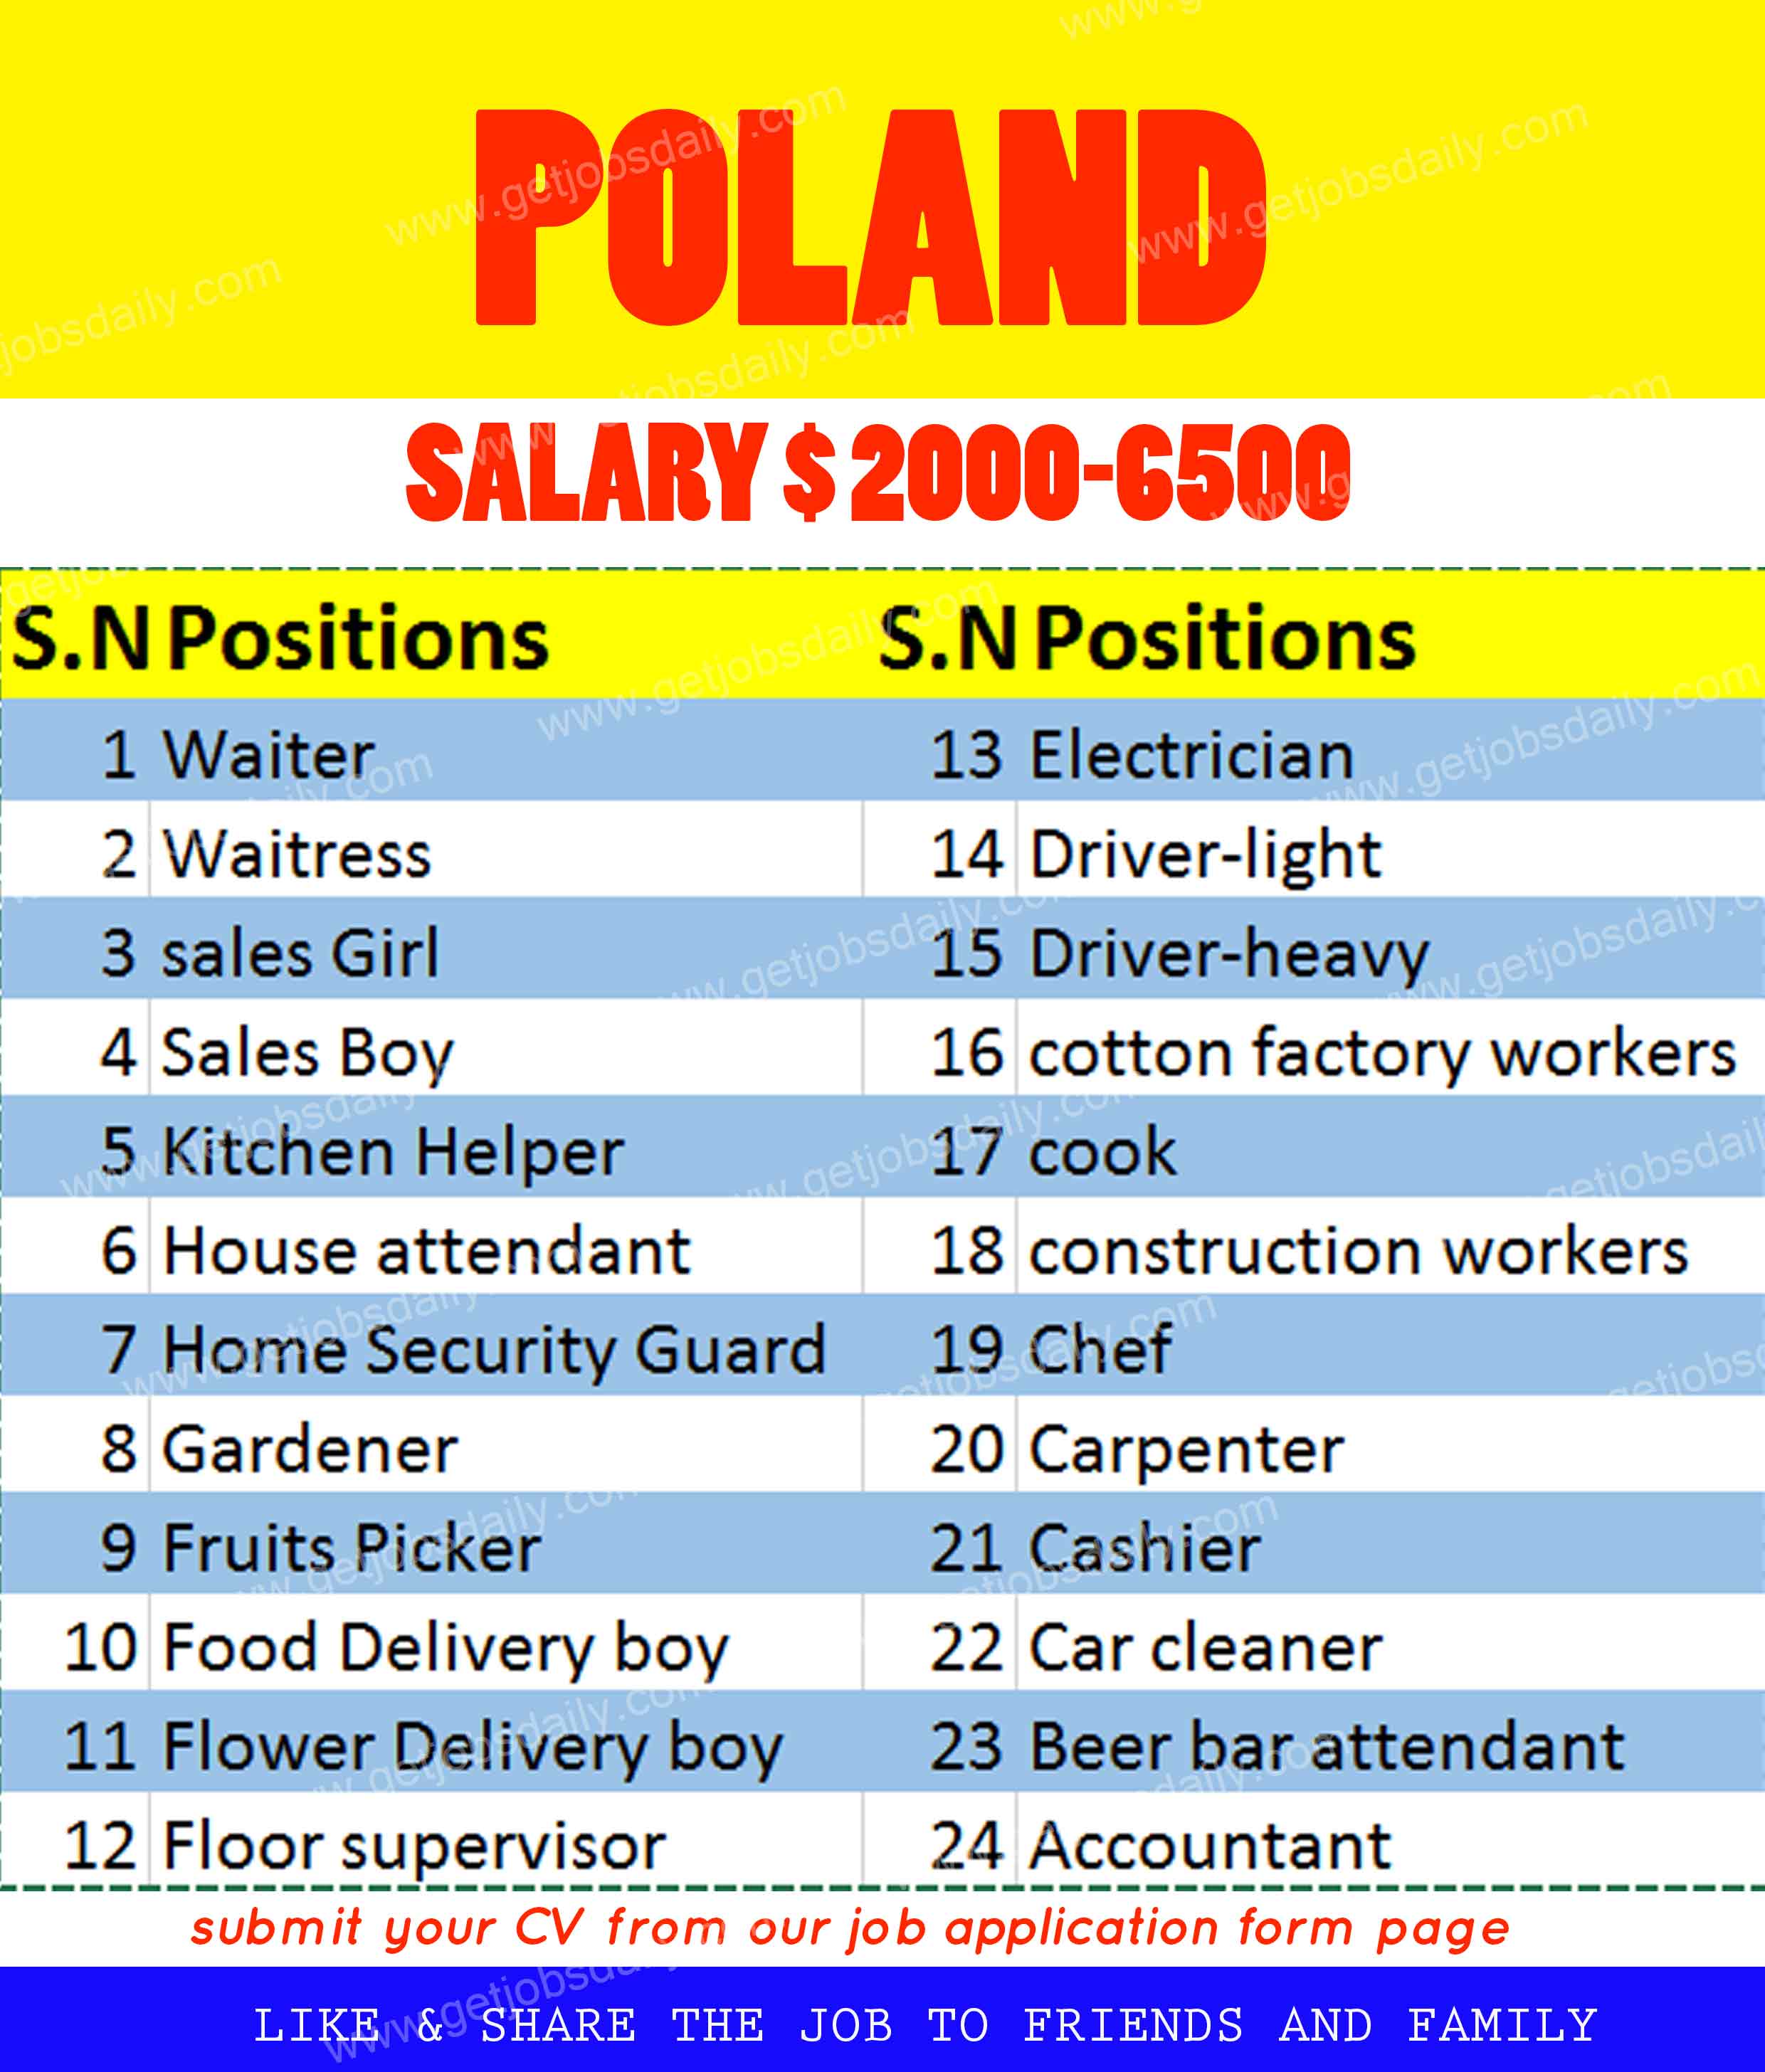 Jobs in Poland - Various